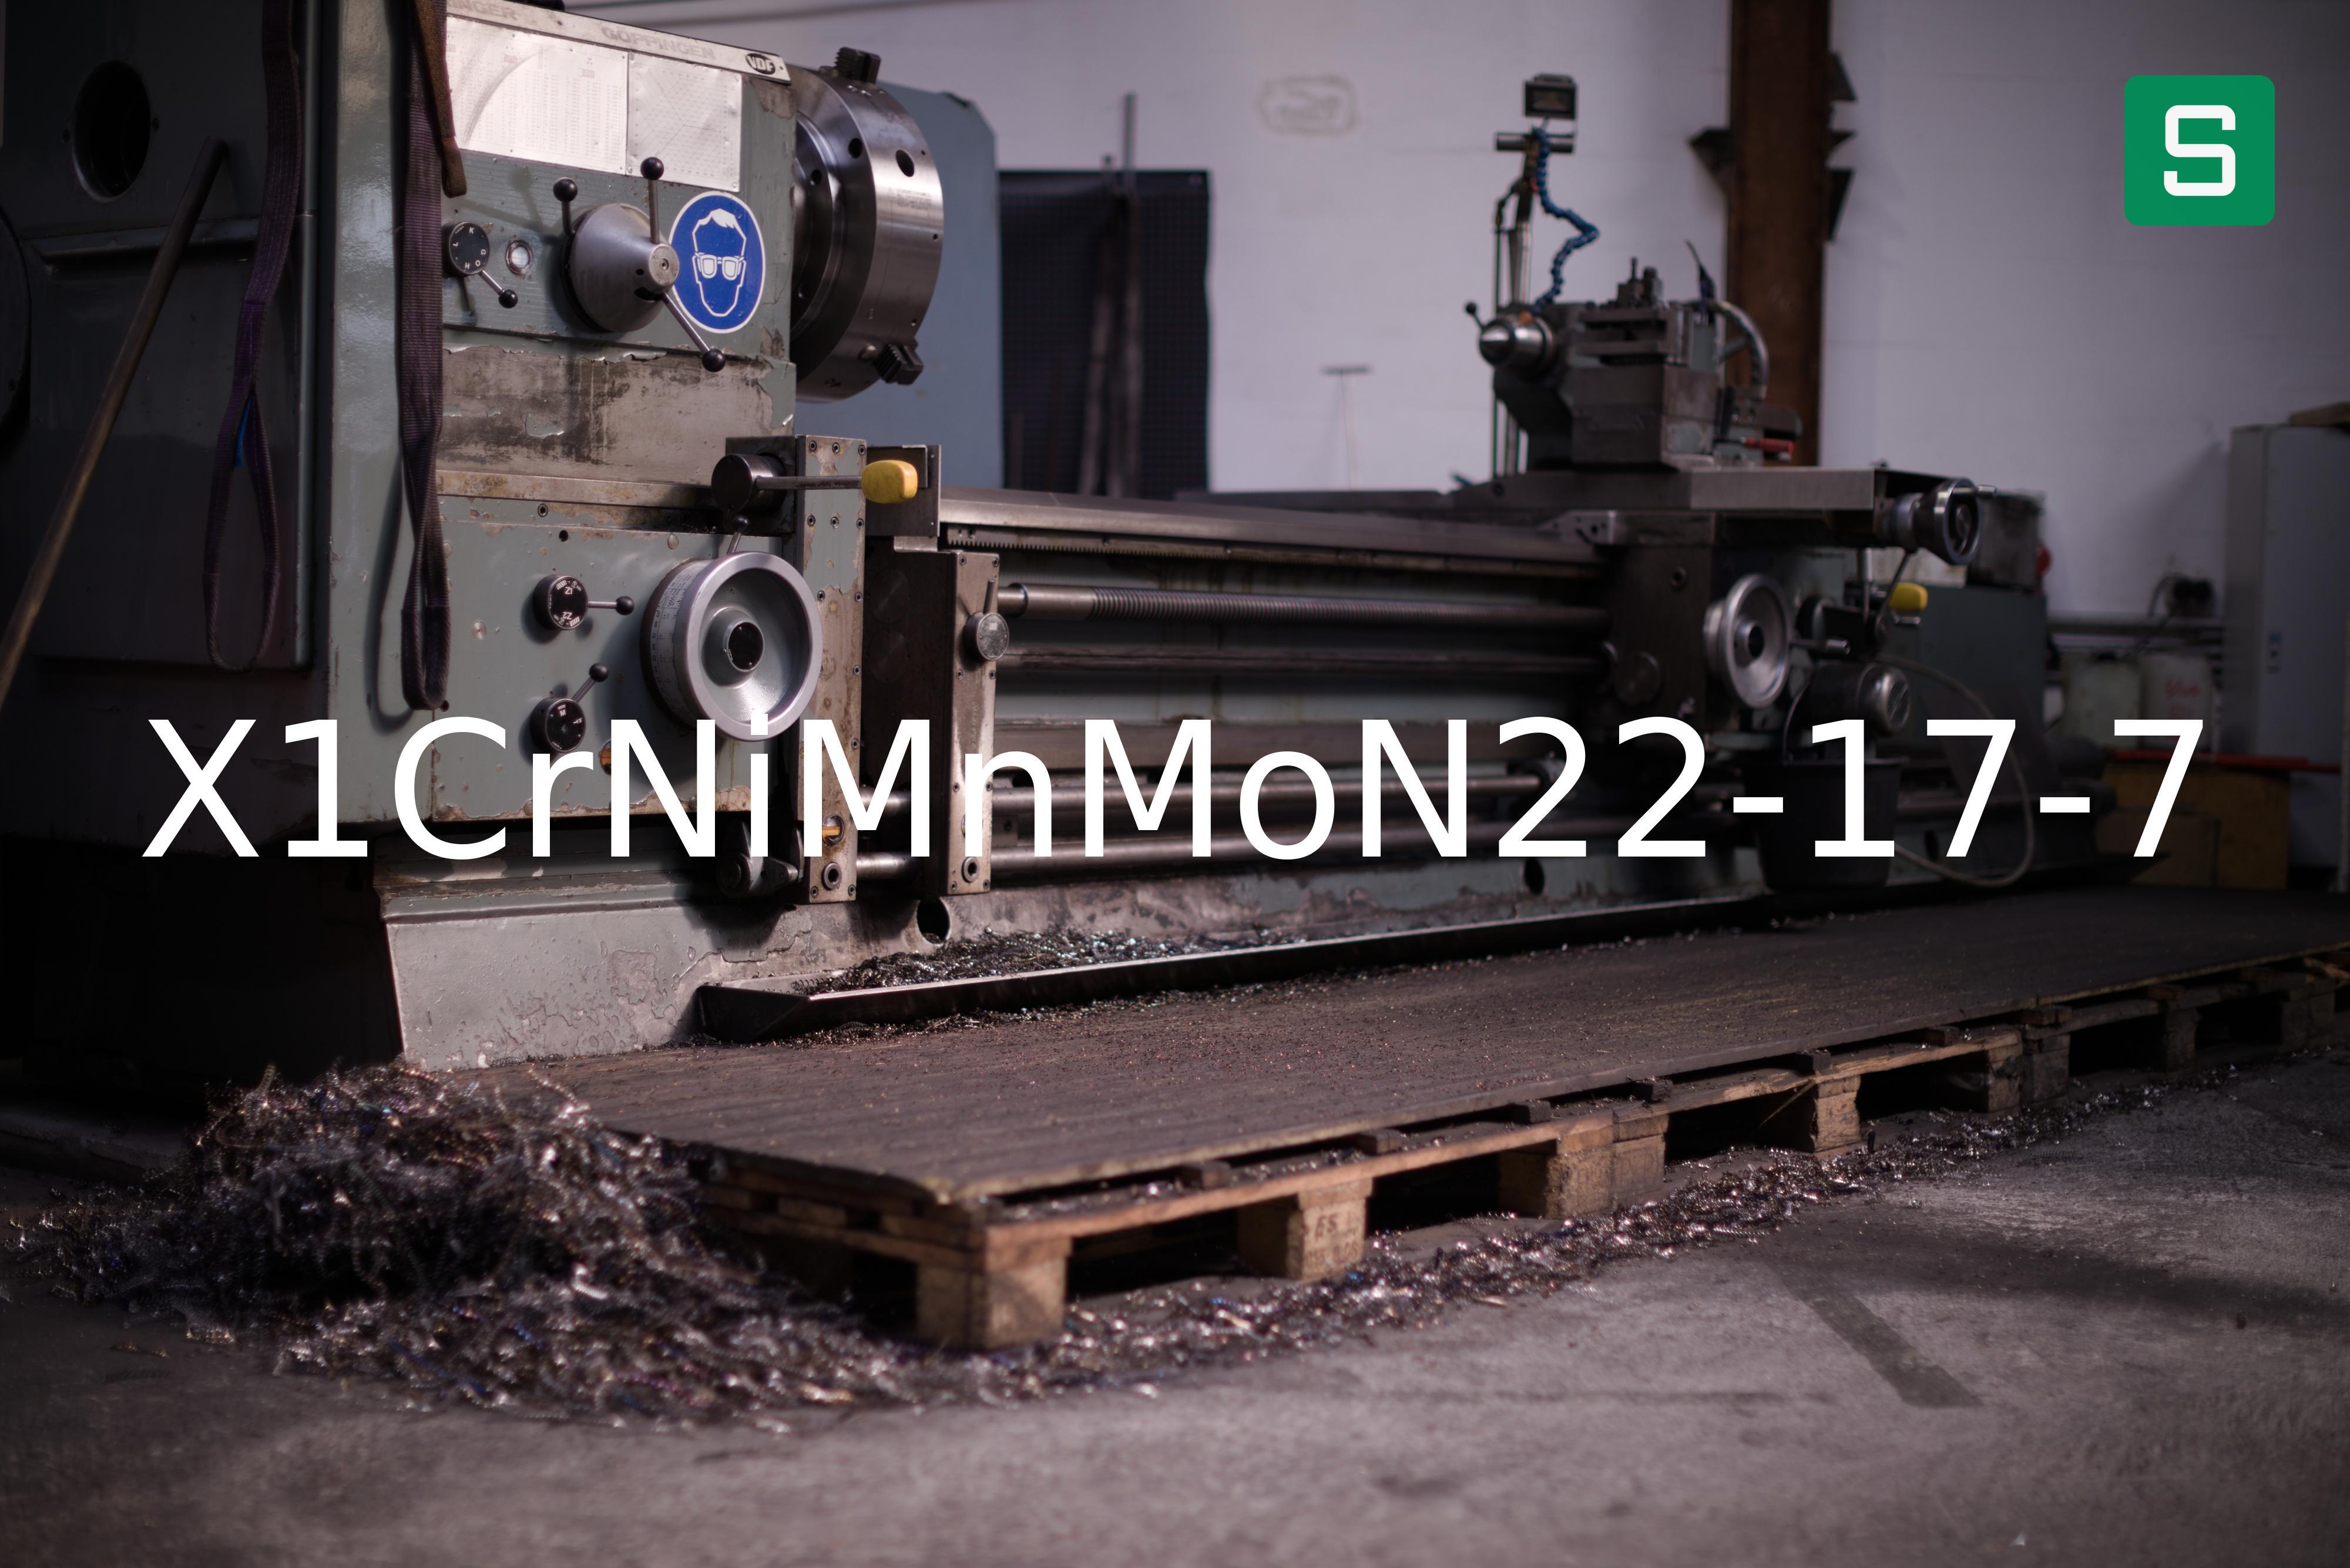 Steel Material: X1CrNiMnMoN22-17-7